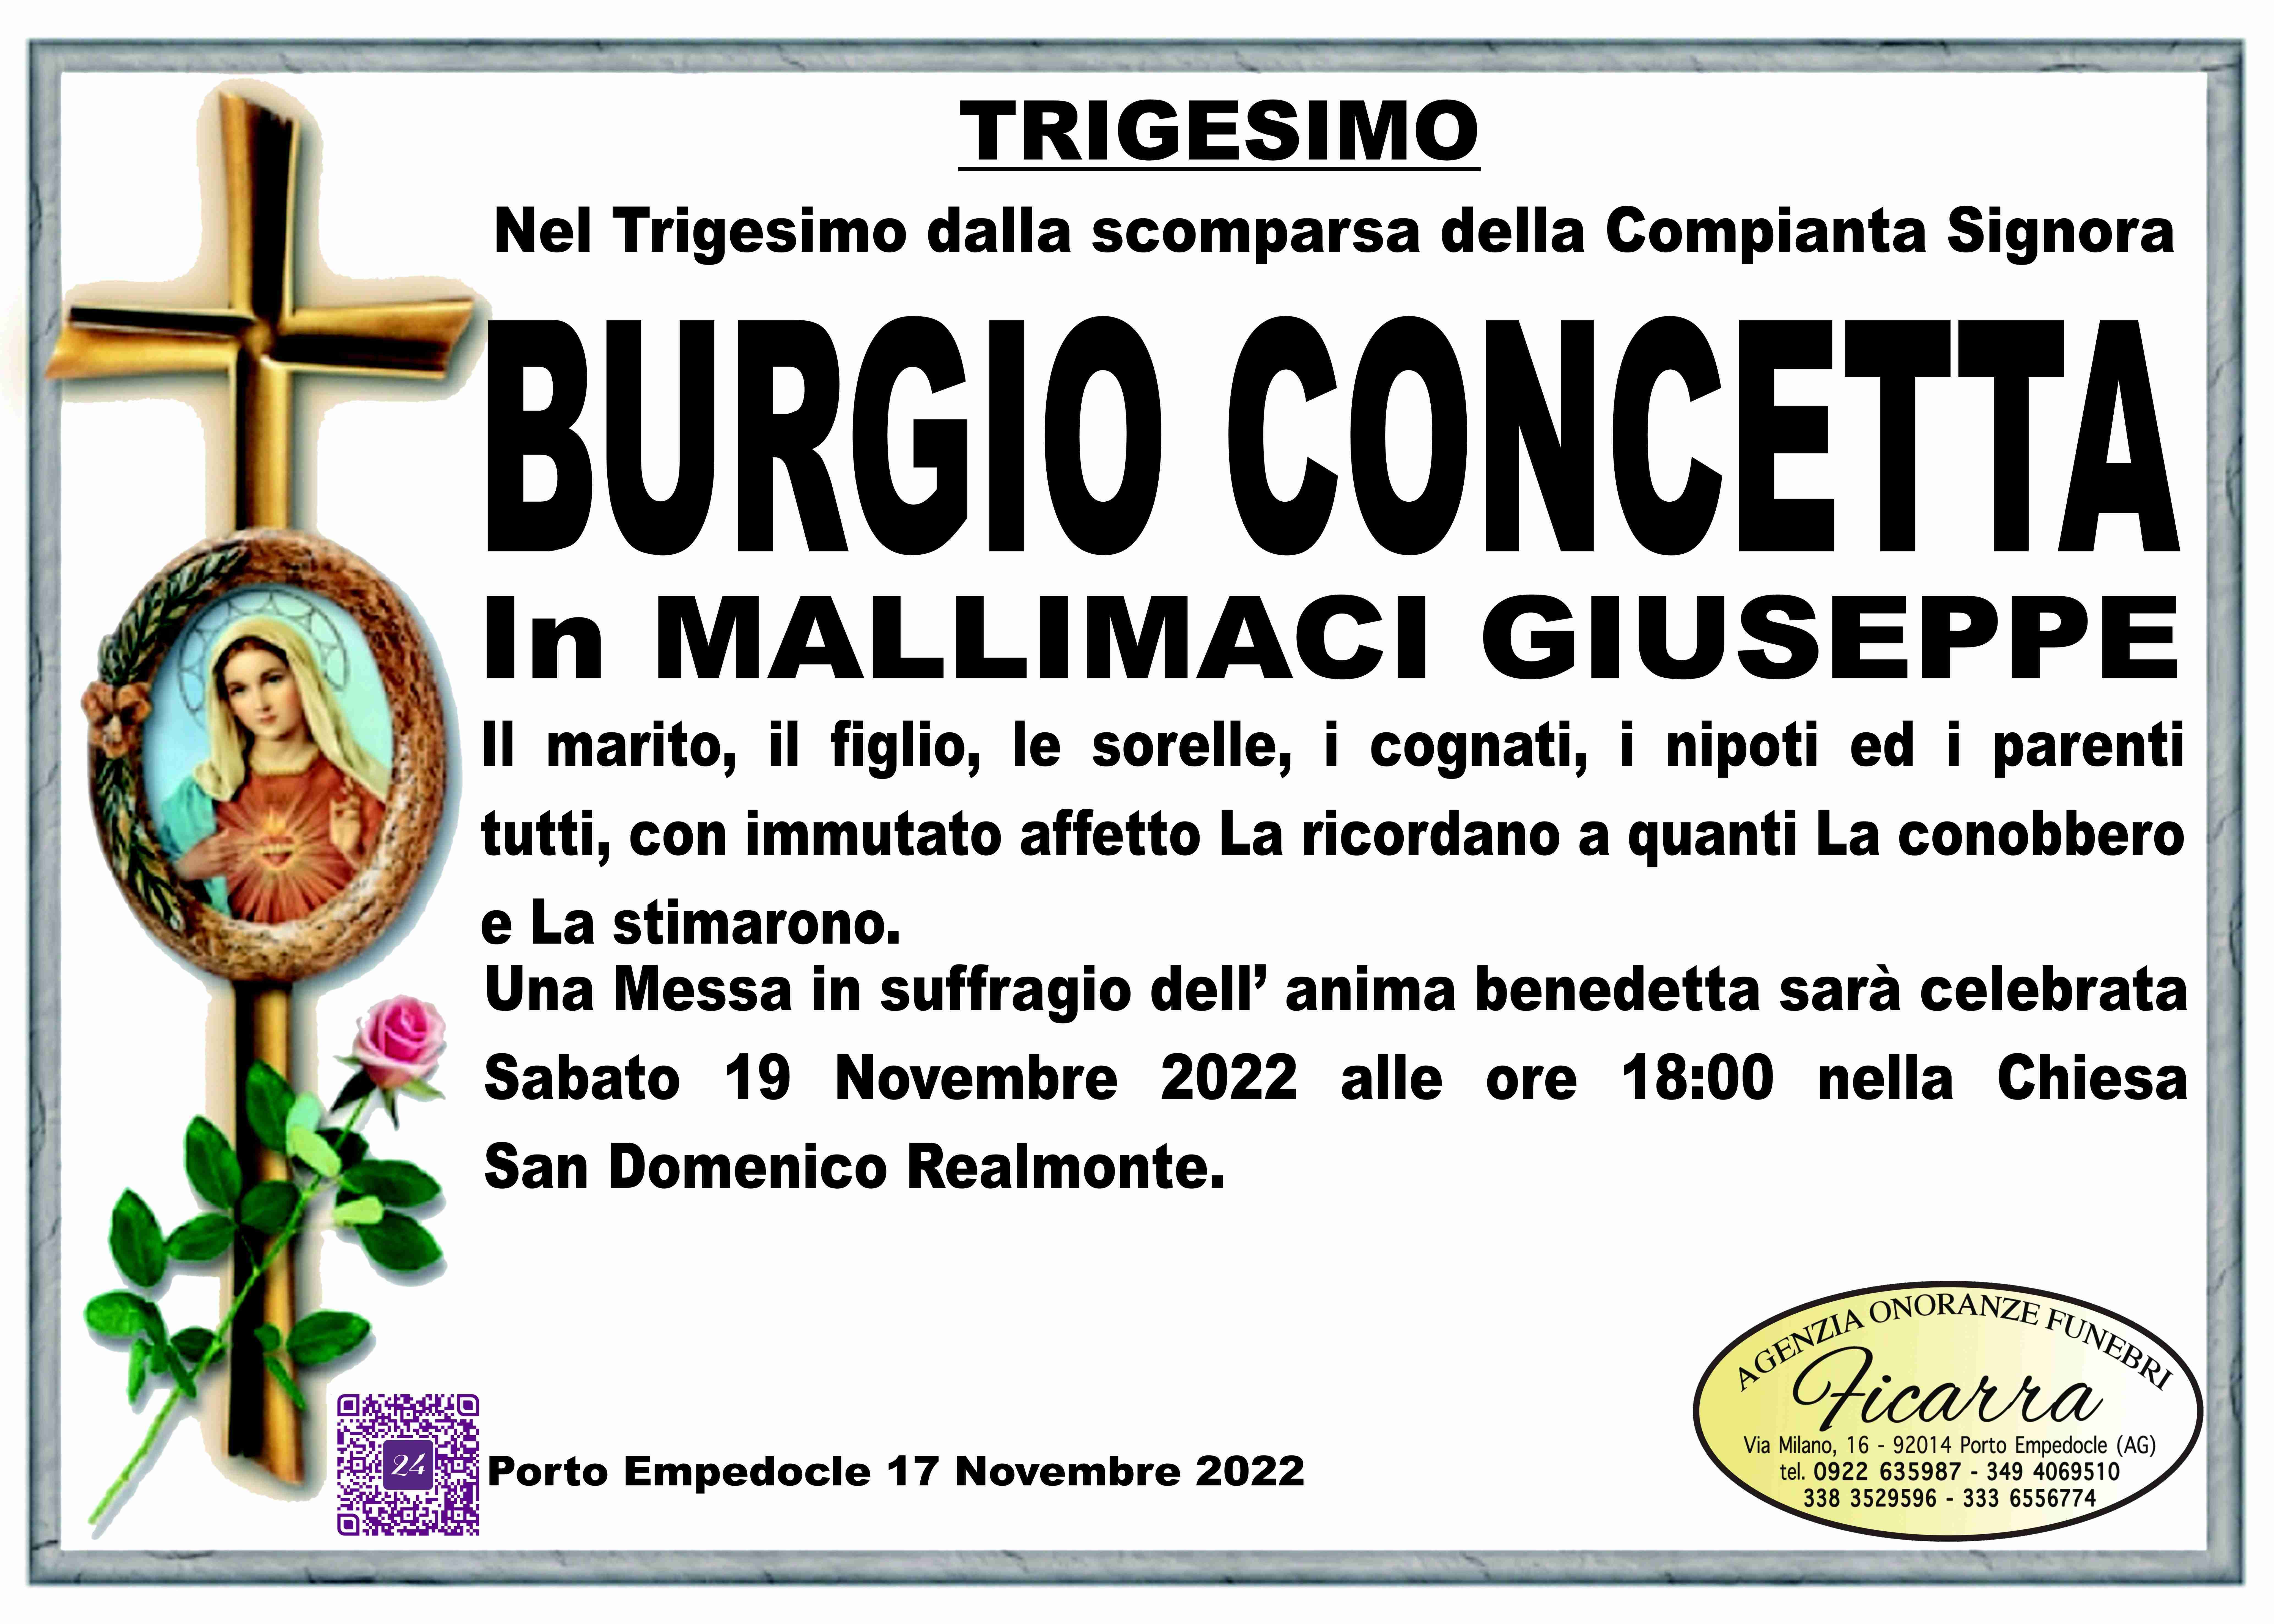 Concetta Burgio